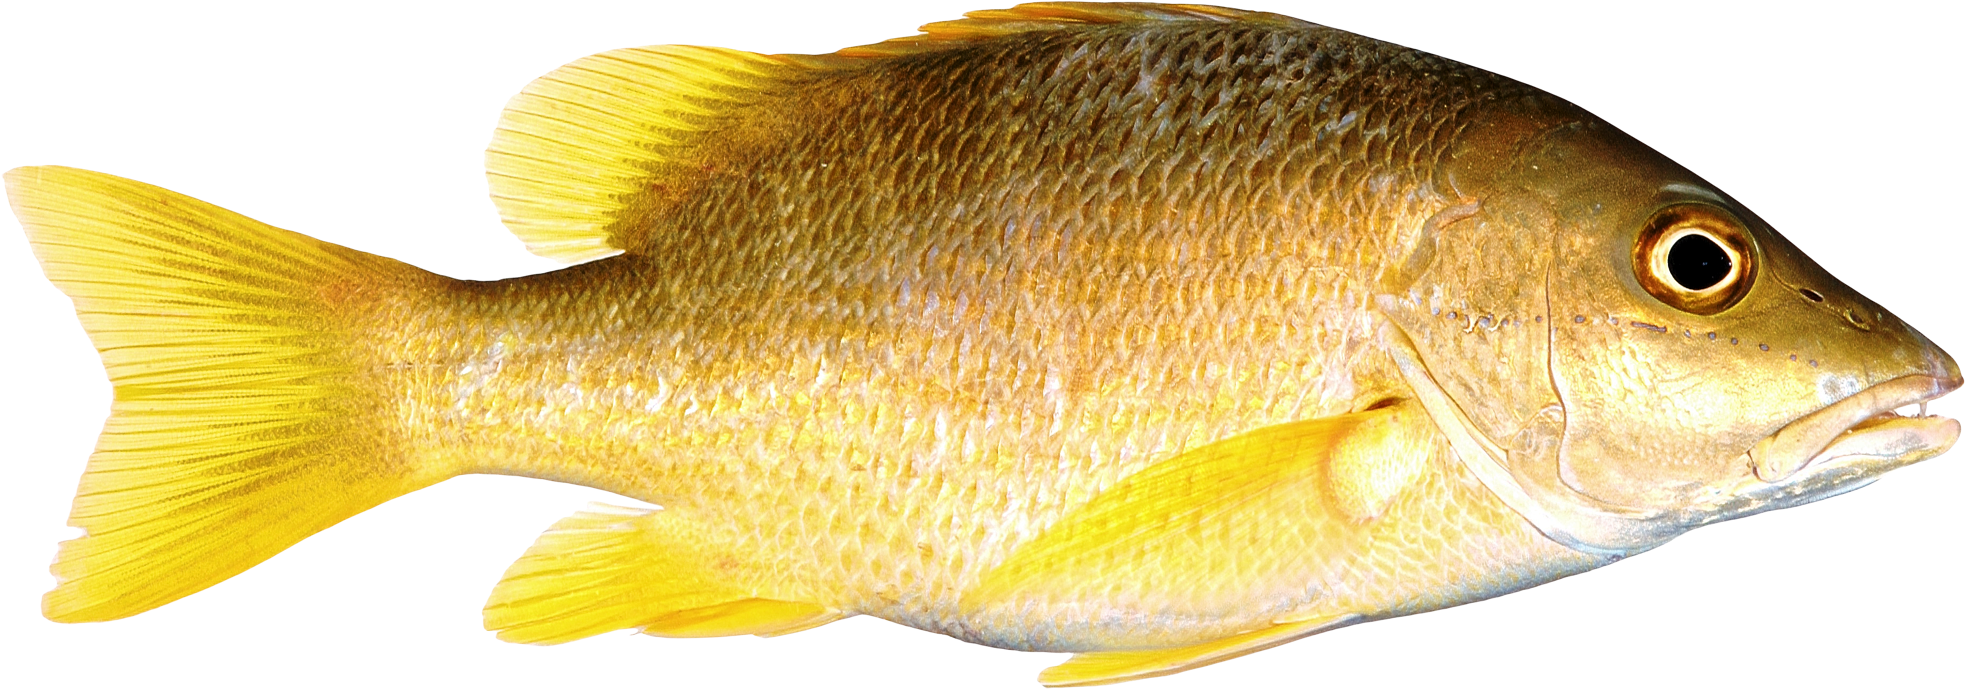 Download Png Image Report - Fish Png Transparent (2000x766)